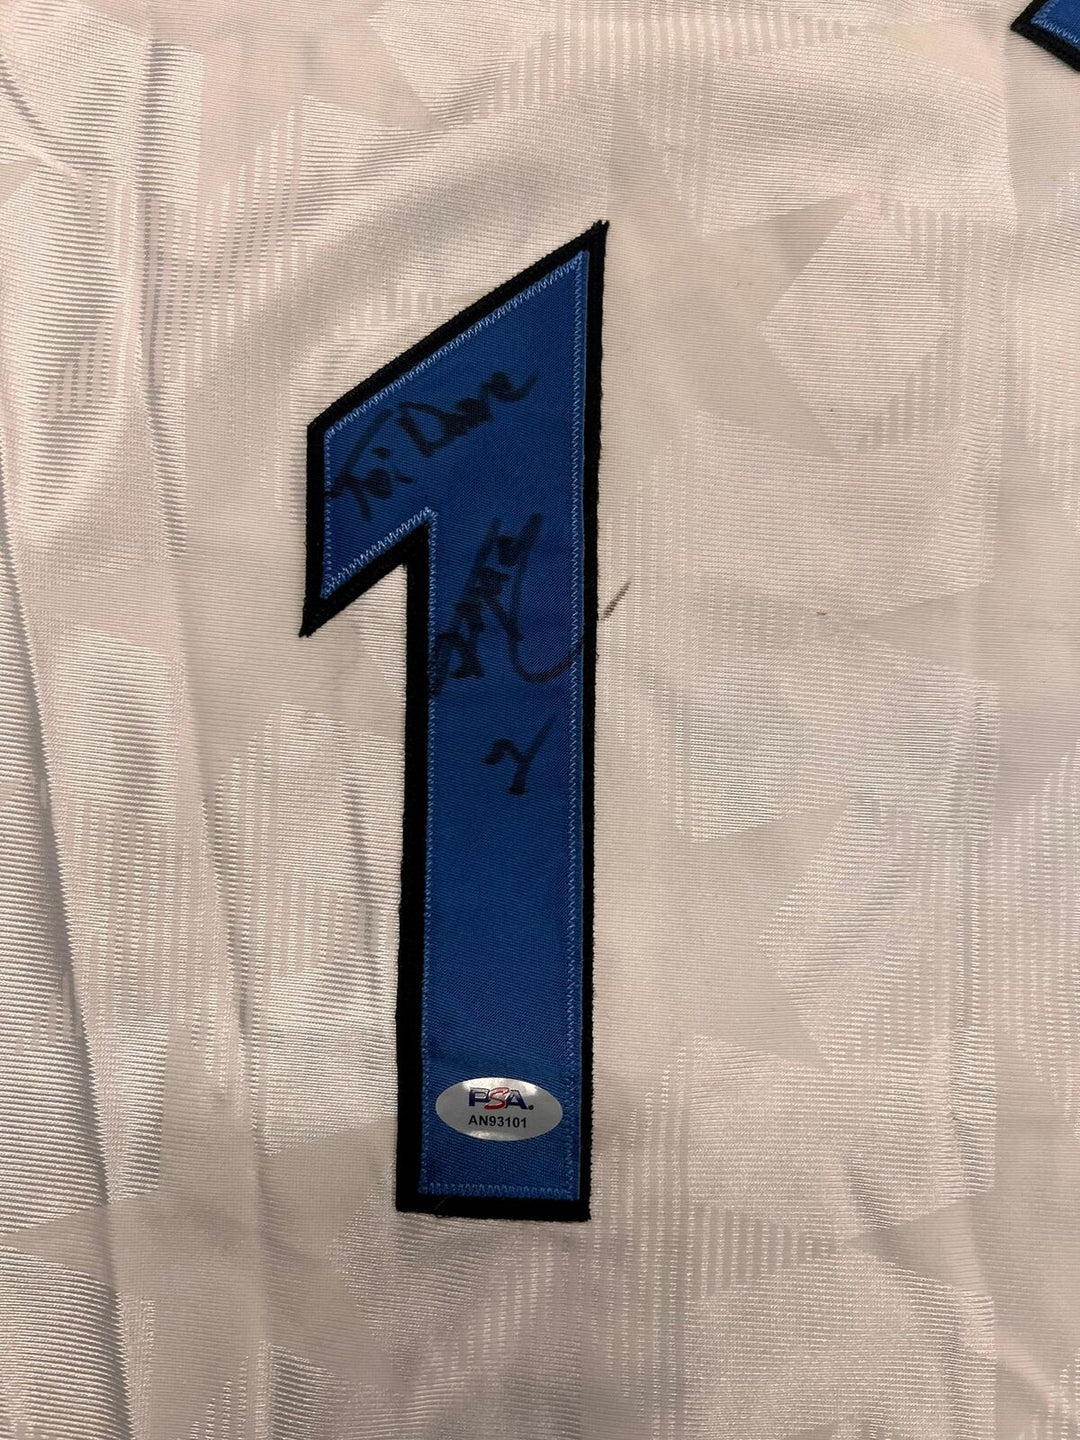 Tracy McGrady signed jersey PSA/DNA Orlando Magic Autographed Image 2